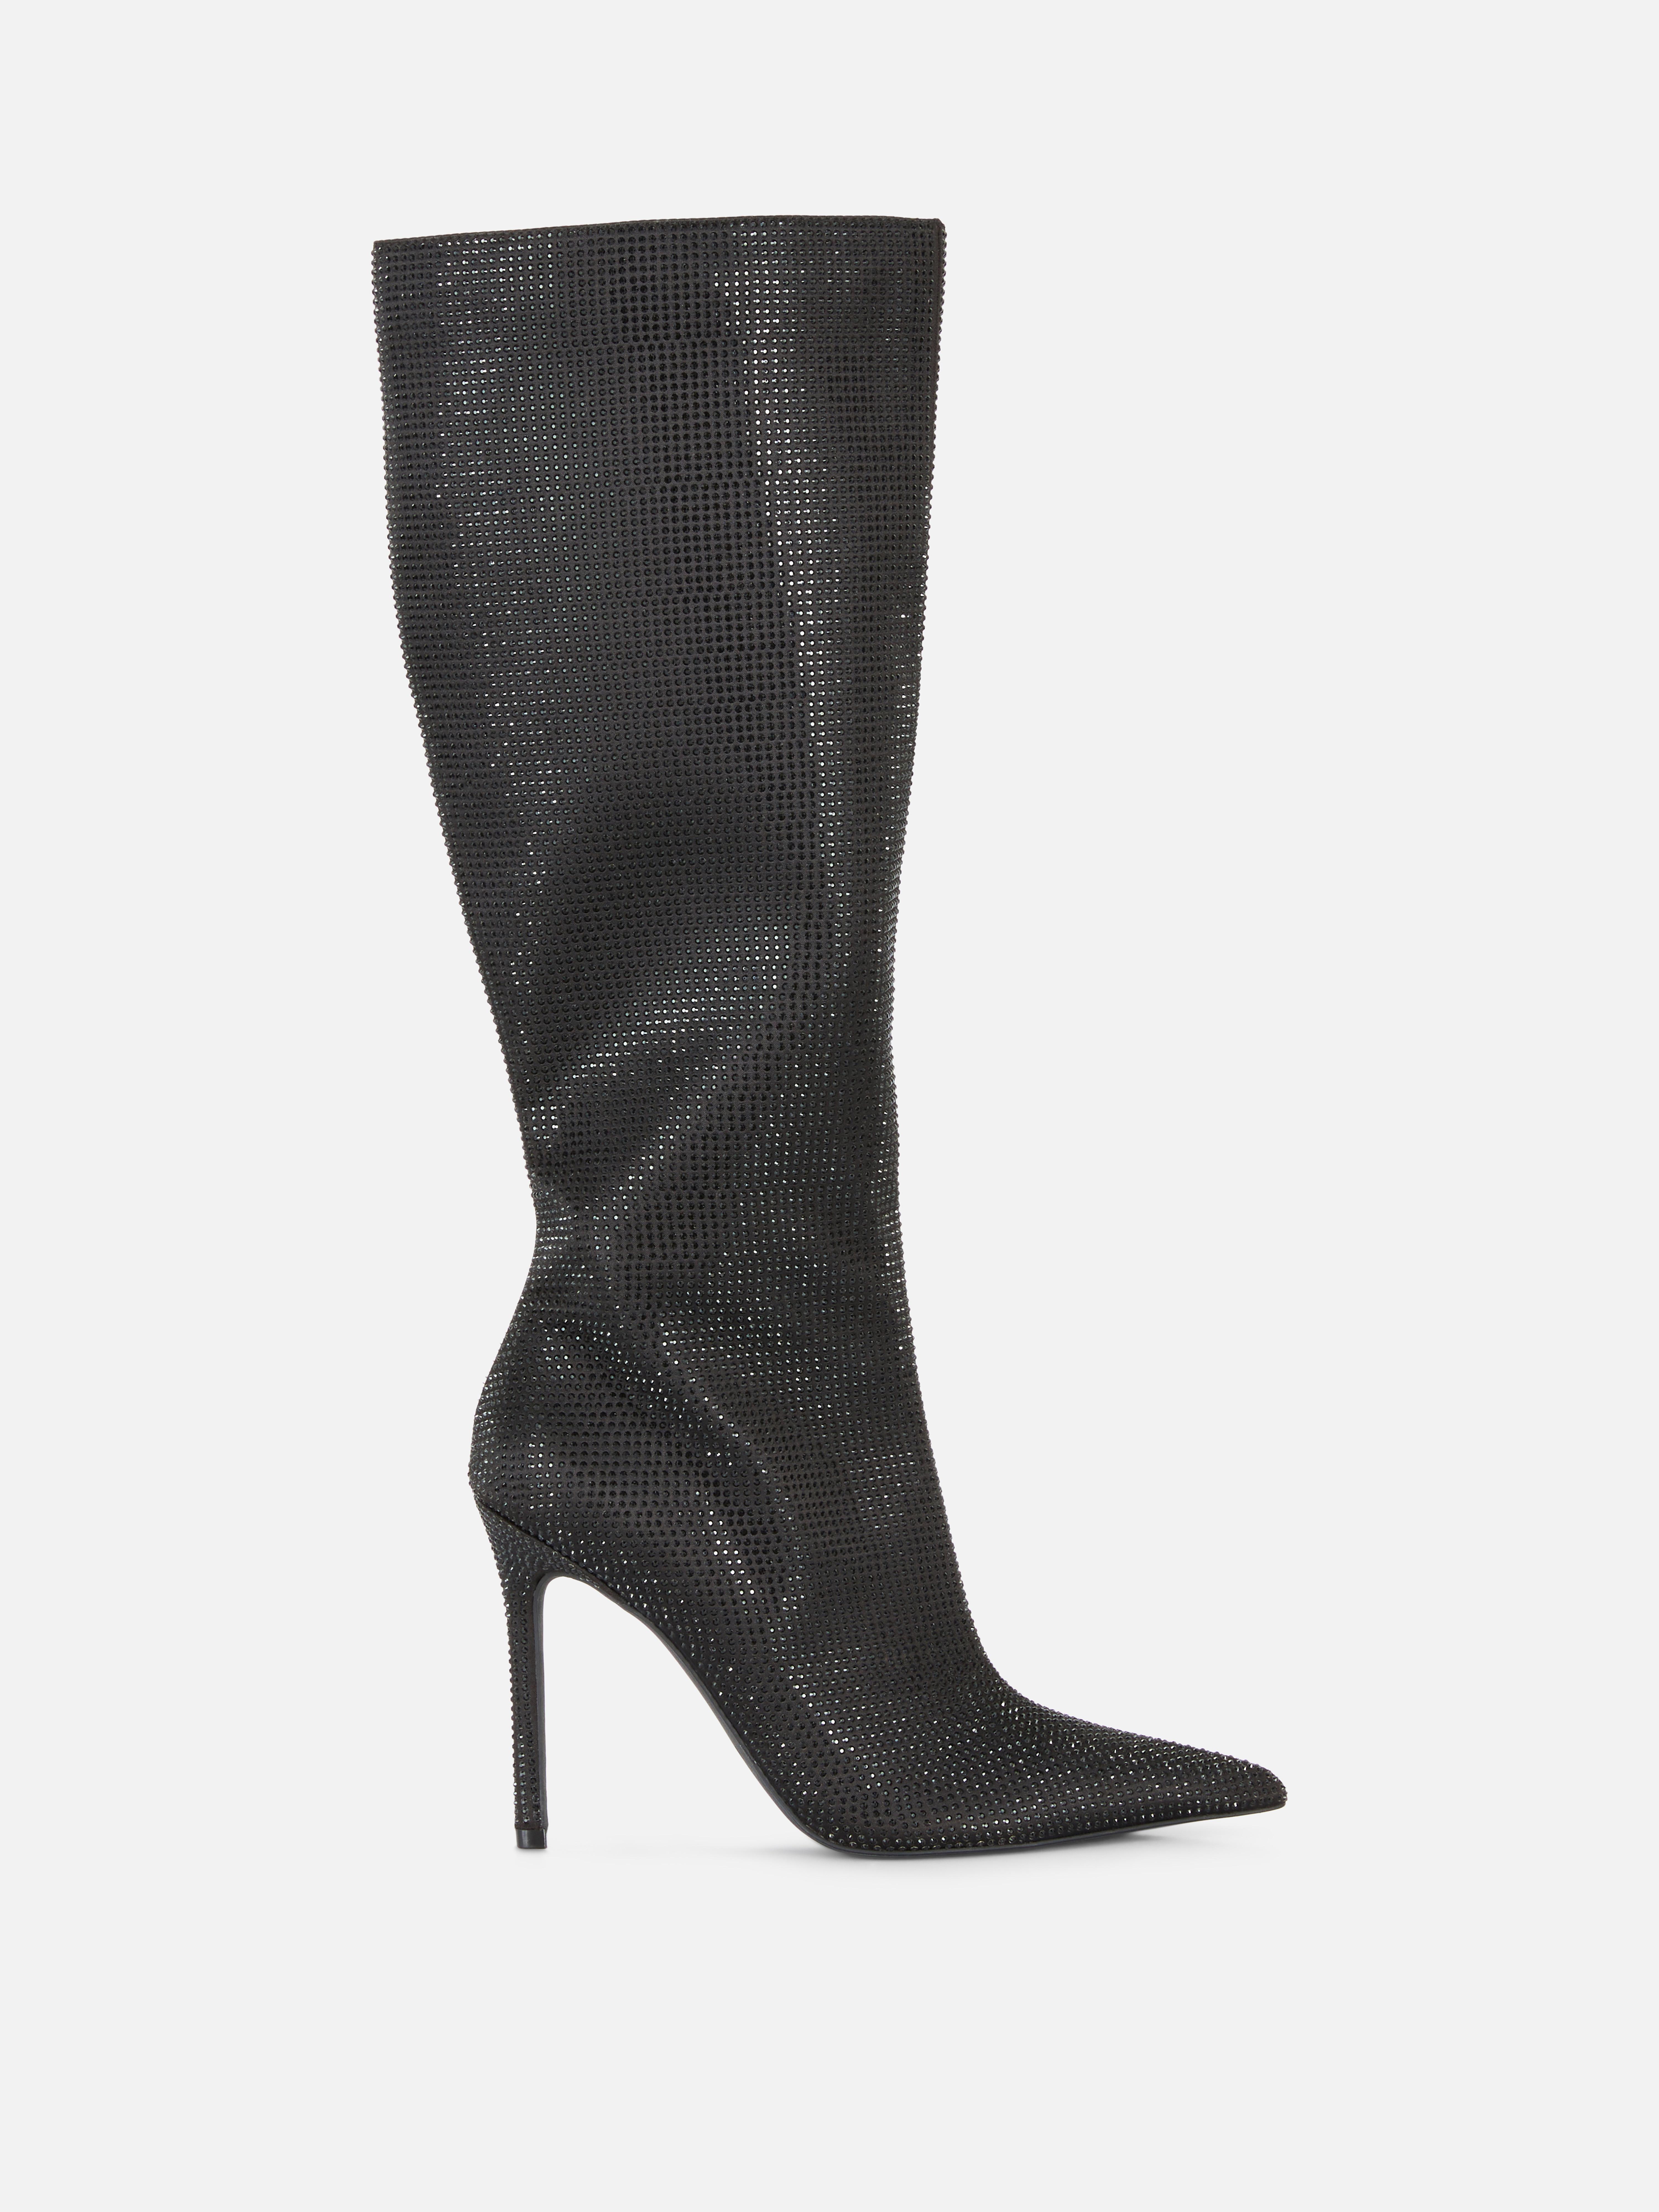 Rita Ora Rhinestone Knee-High Boots